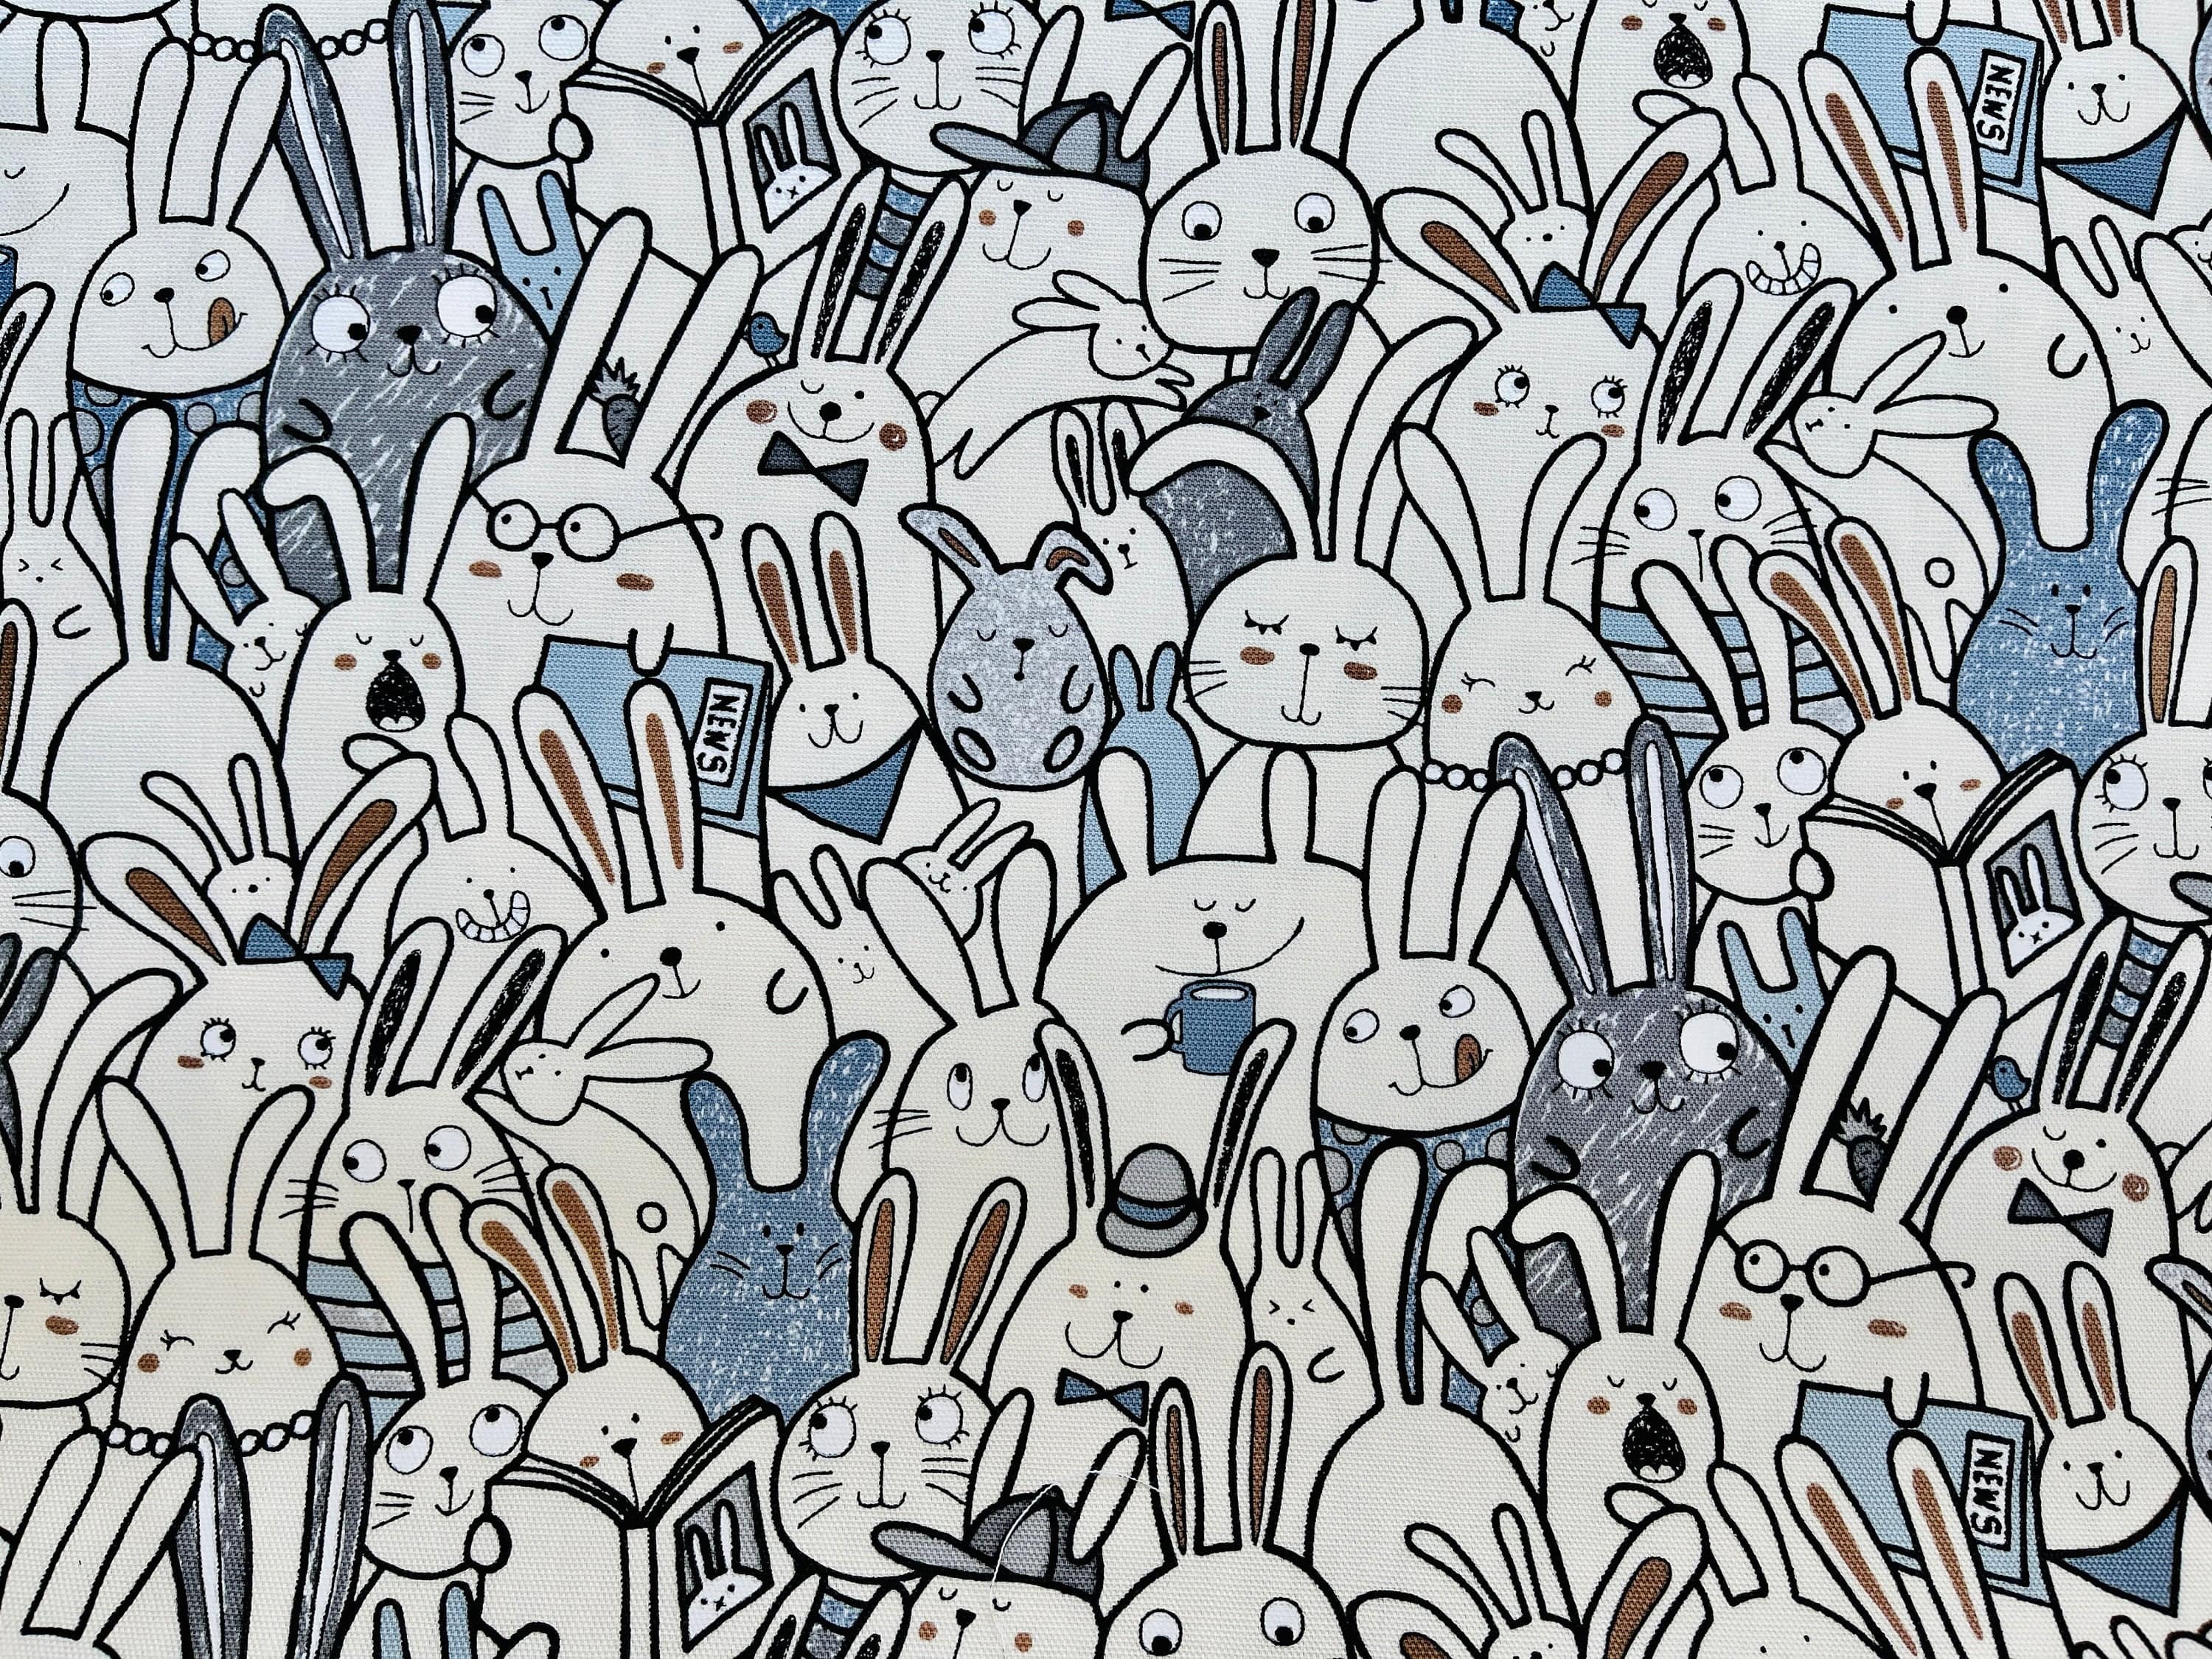 Rabbit - Rabbit Oxford Fabric - Japanese Fabric - Gray Black Blue - SK-7100